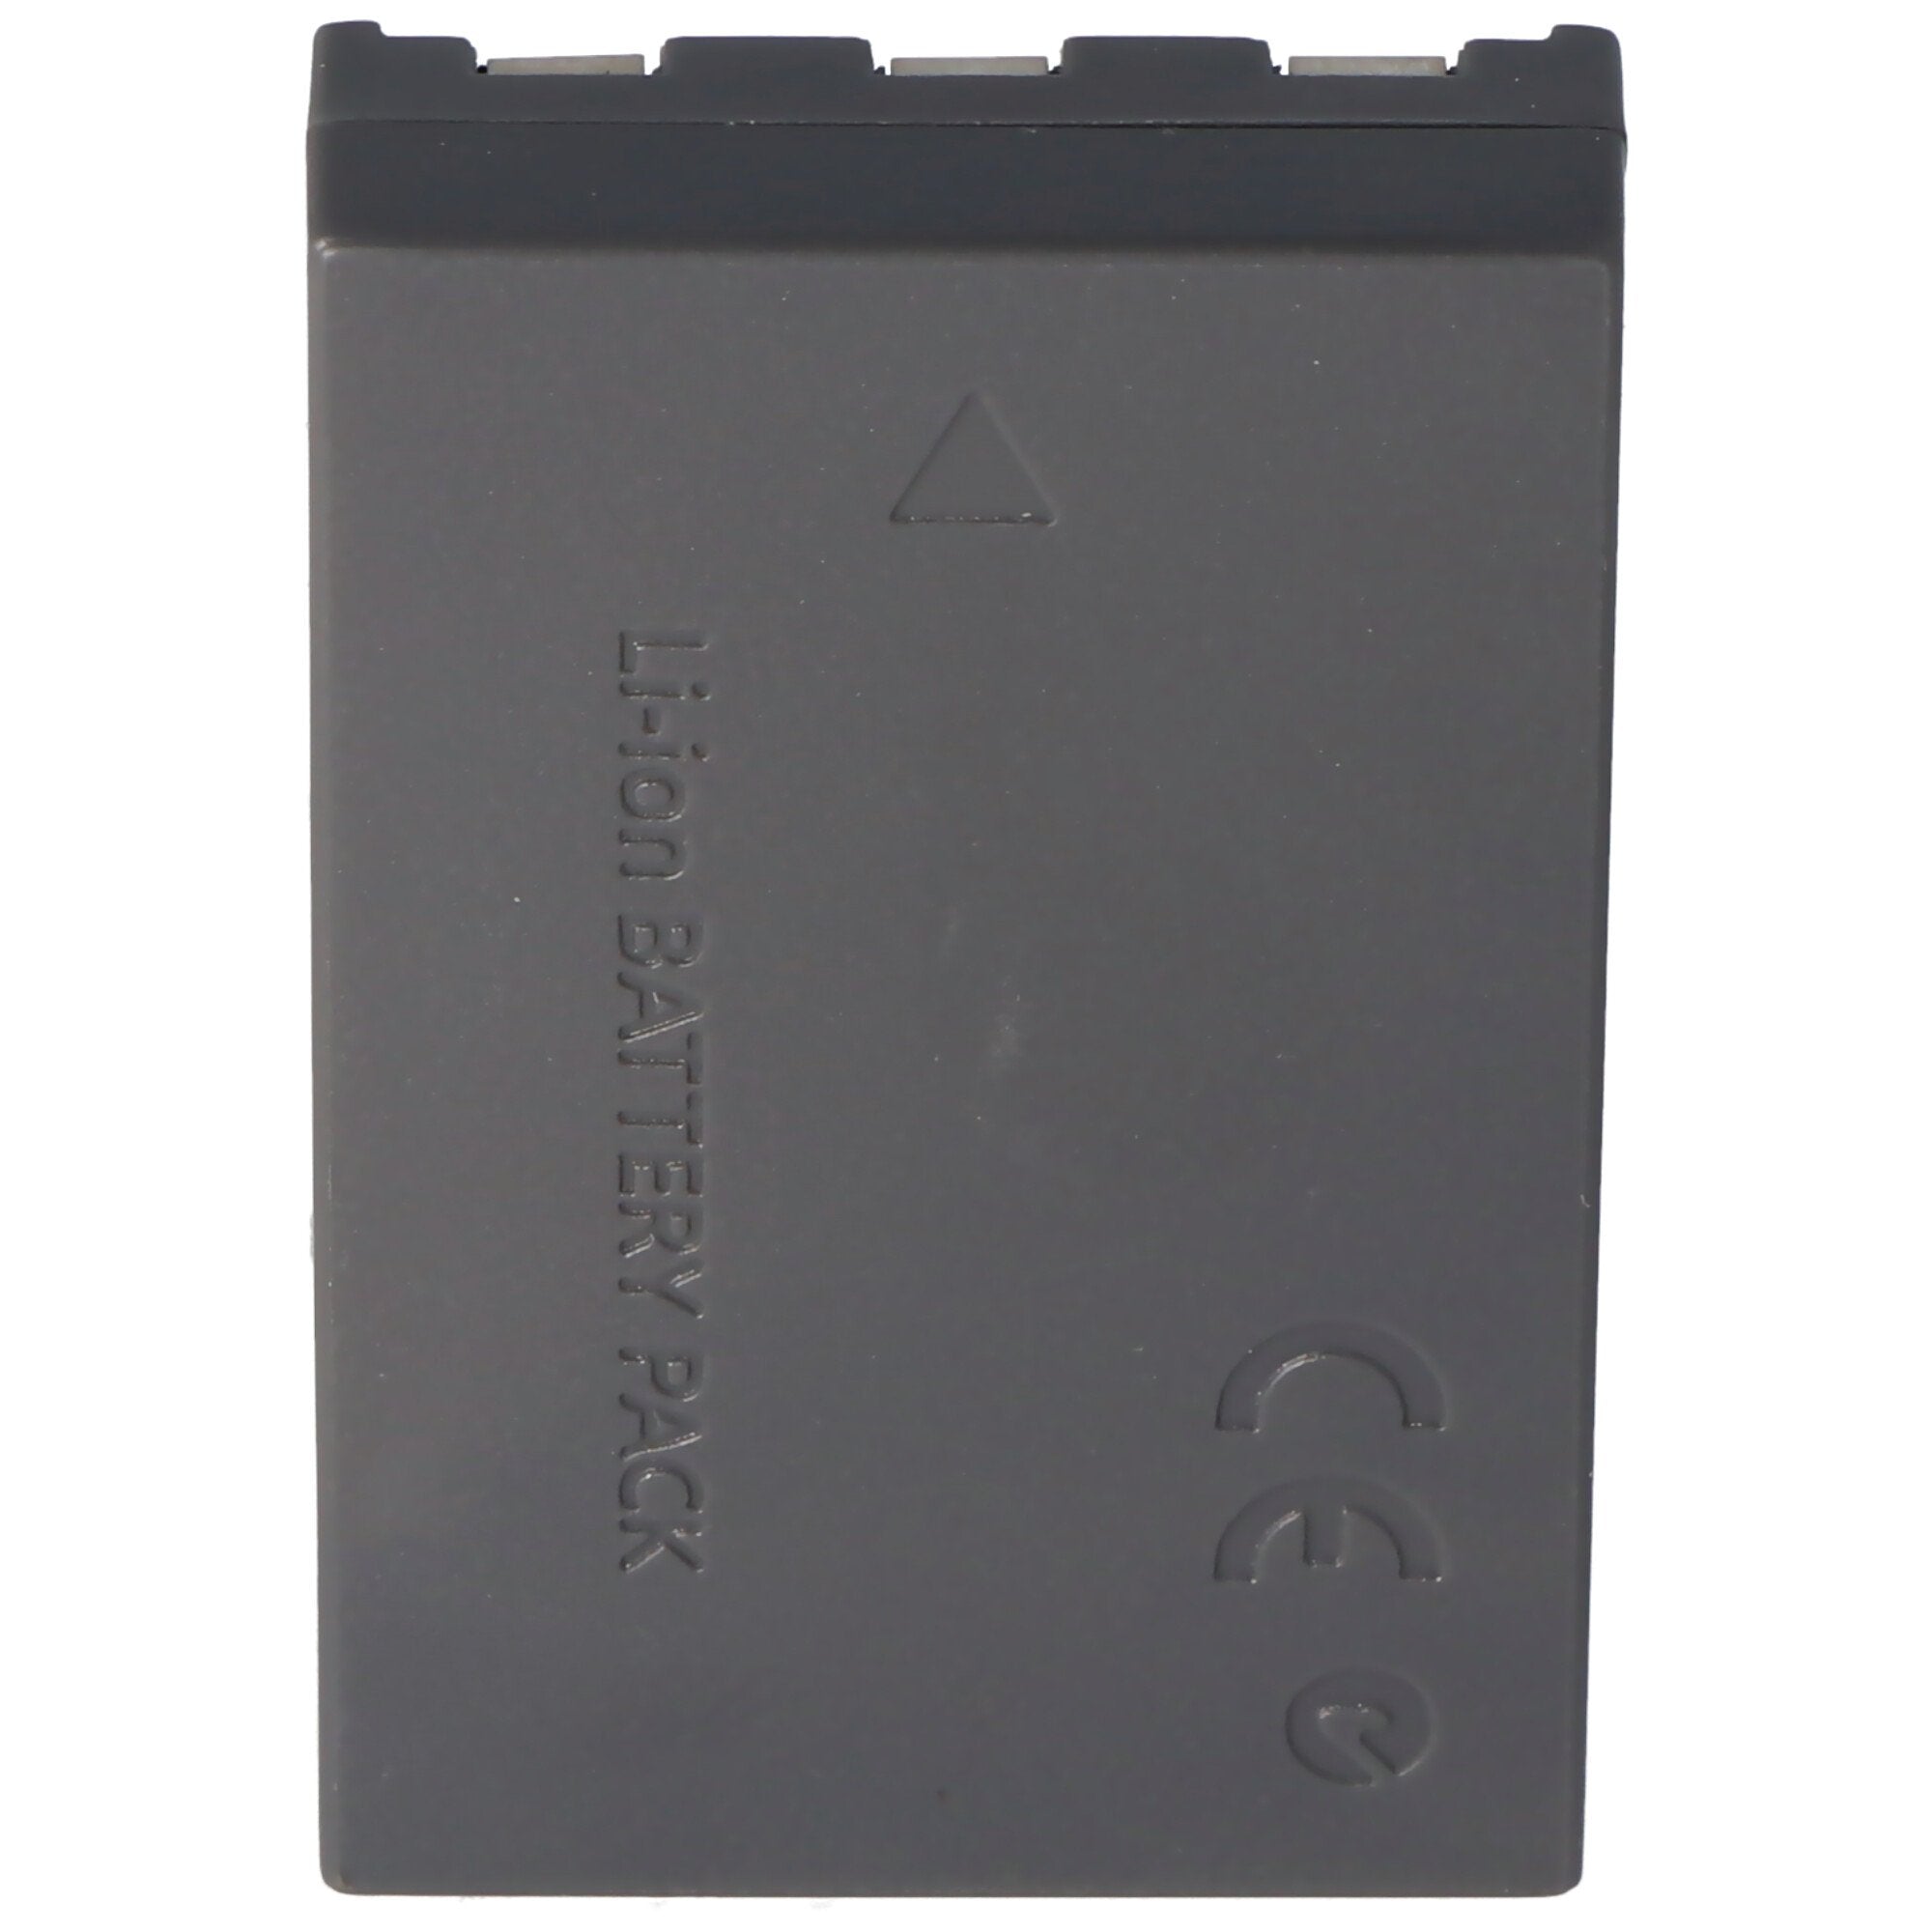 Battery suitable for Canon Digital IXUS V3, IXUS VIII